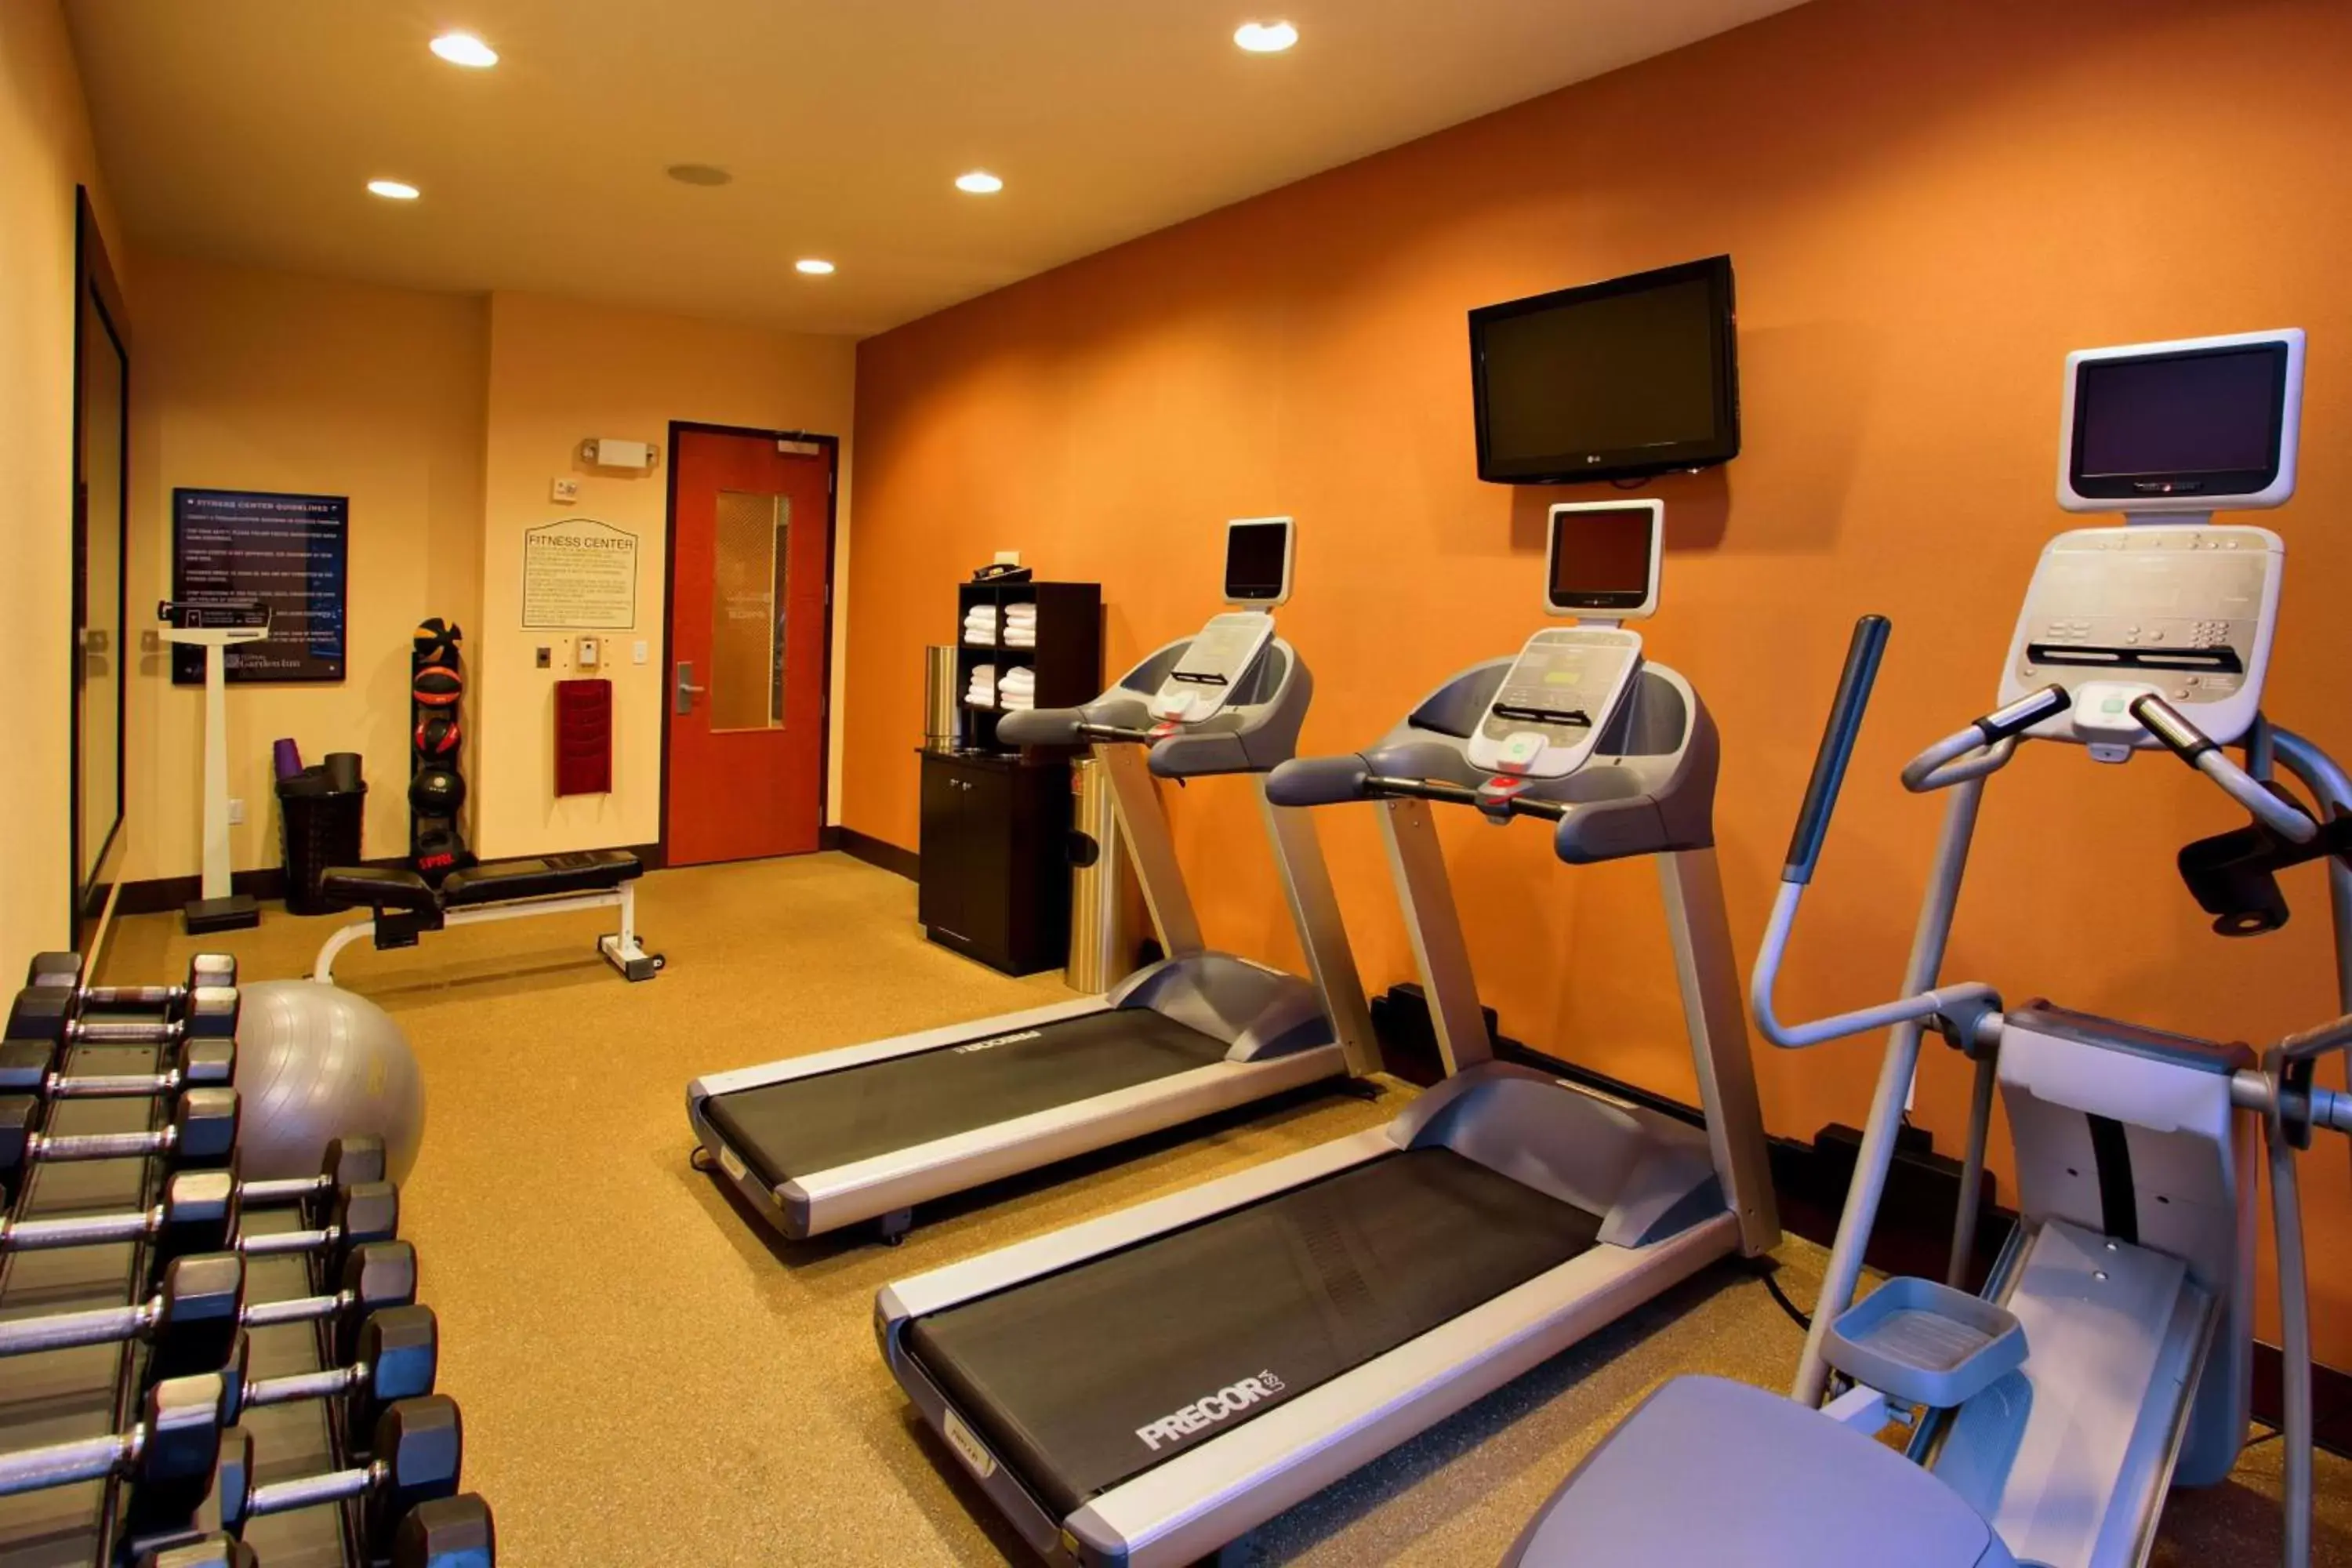 Fitness centre/facilities, Fitness Center/Facilities in Hilton Garden Inn West Palm Beach Airport